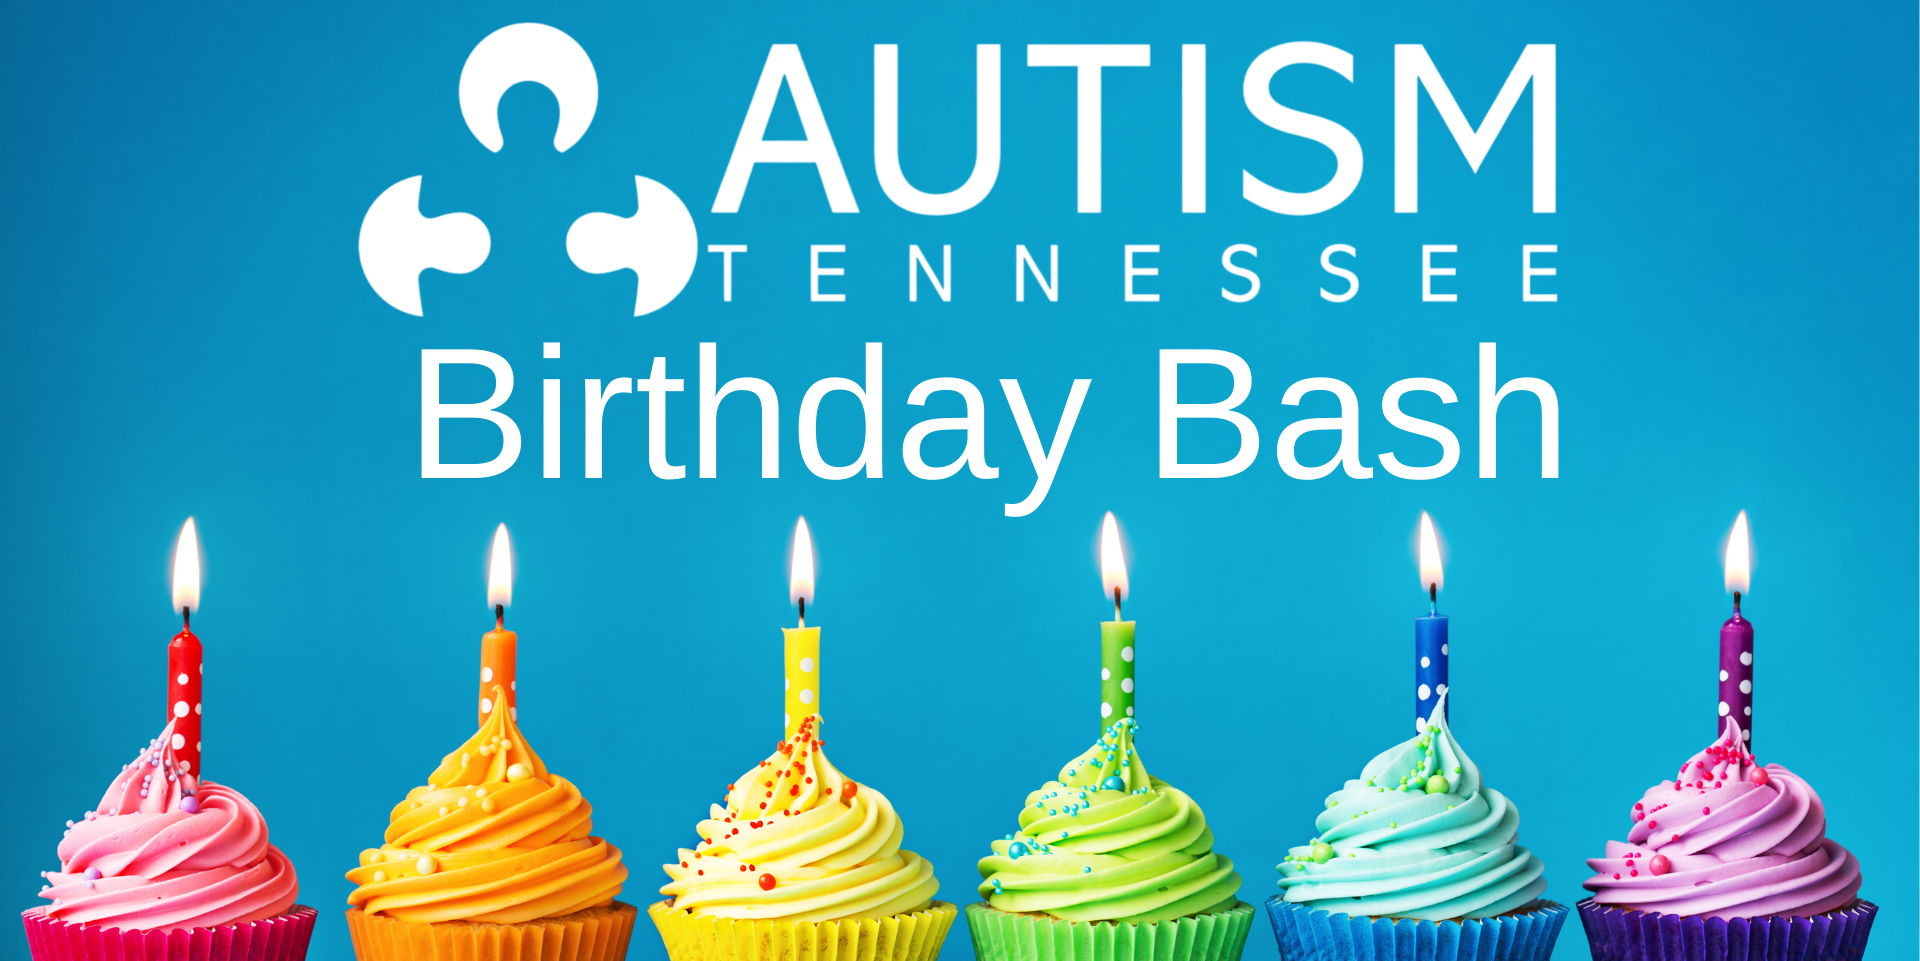 Birthday Bash Adventure Science Center promotional image